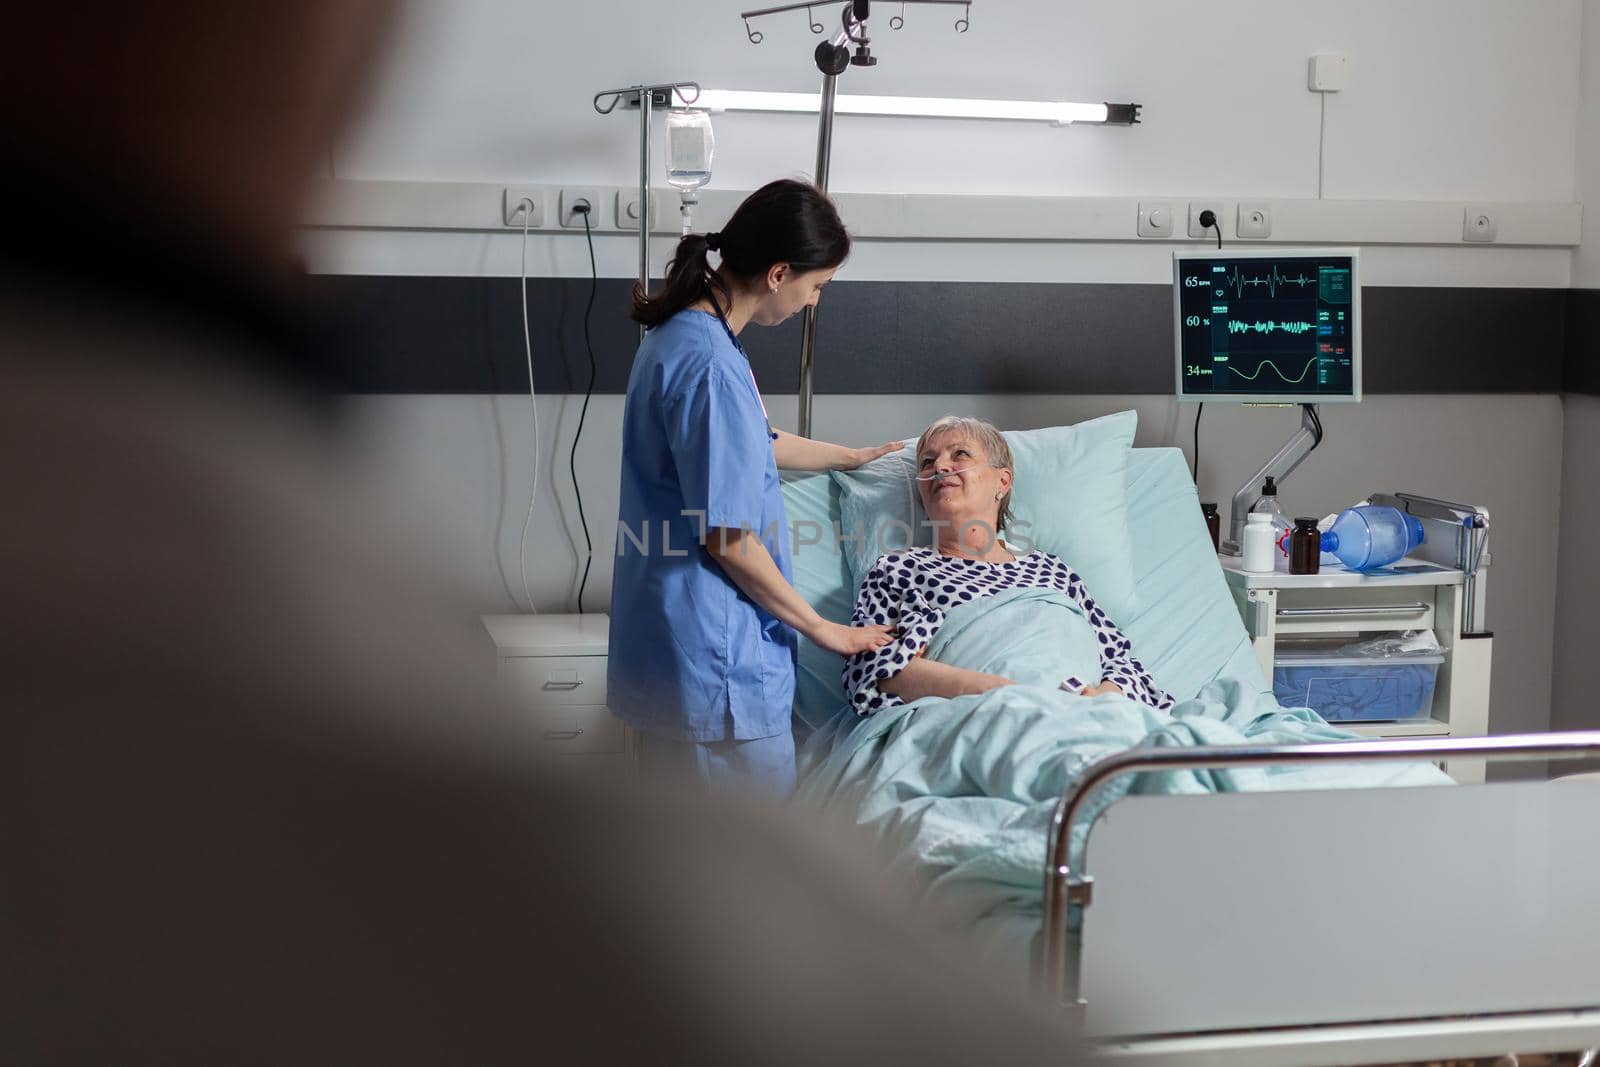 Fiendly doctor hands holding patient hand in hospital room by DCStudio